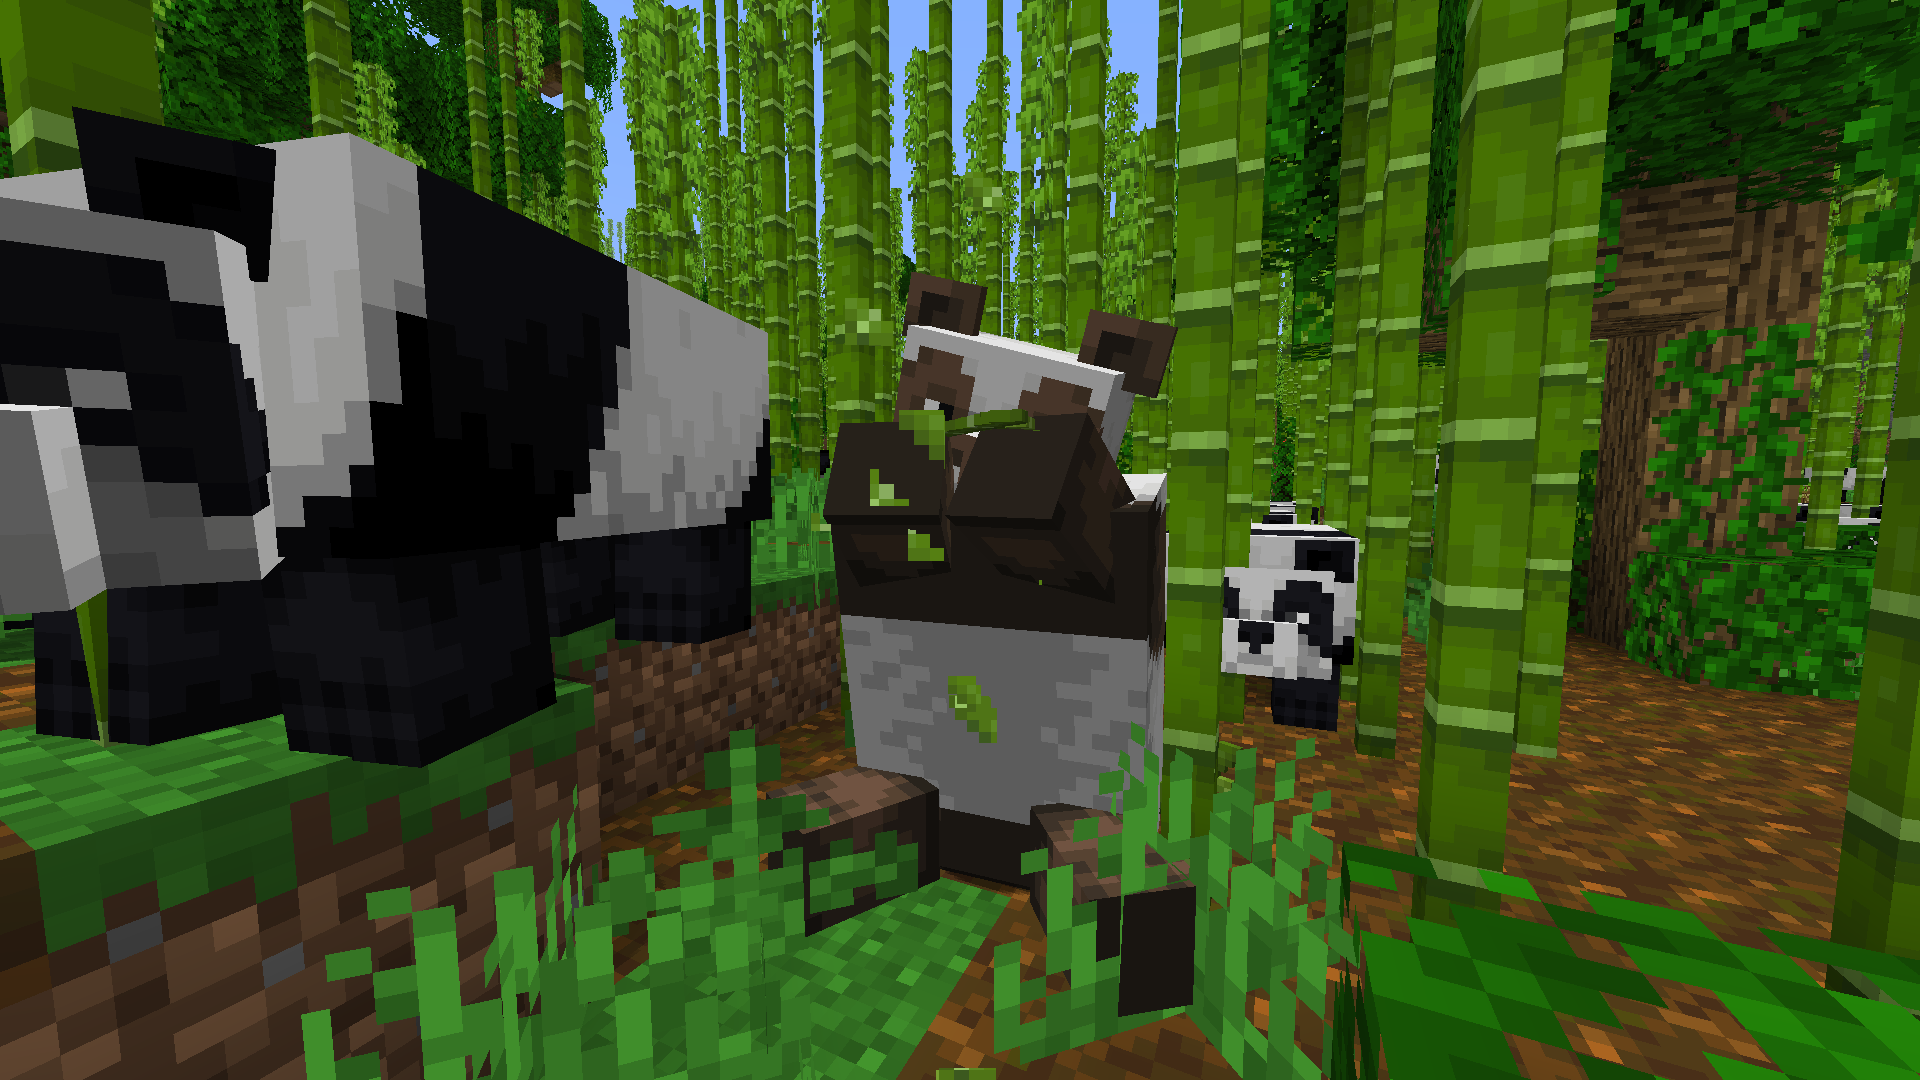 I found the Brown Panda!